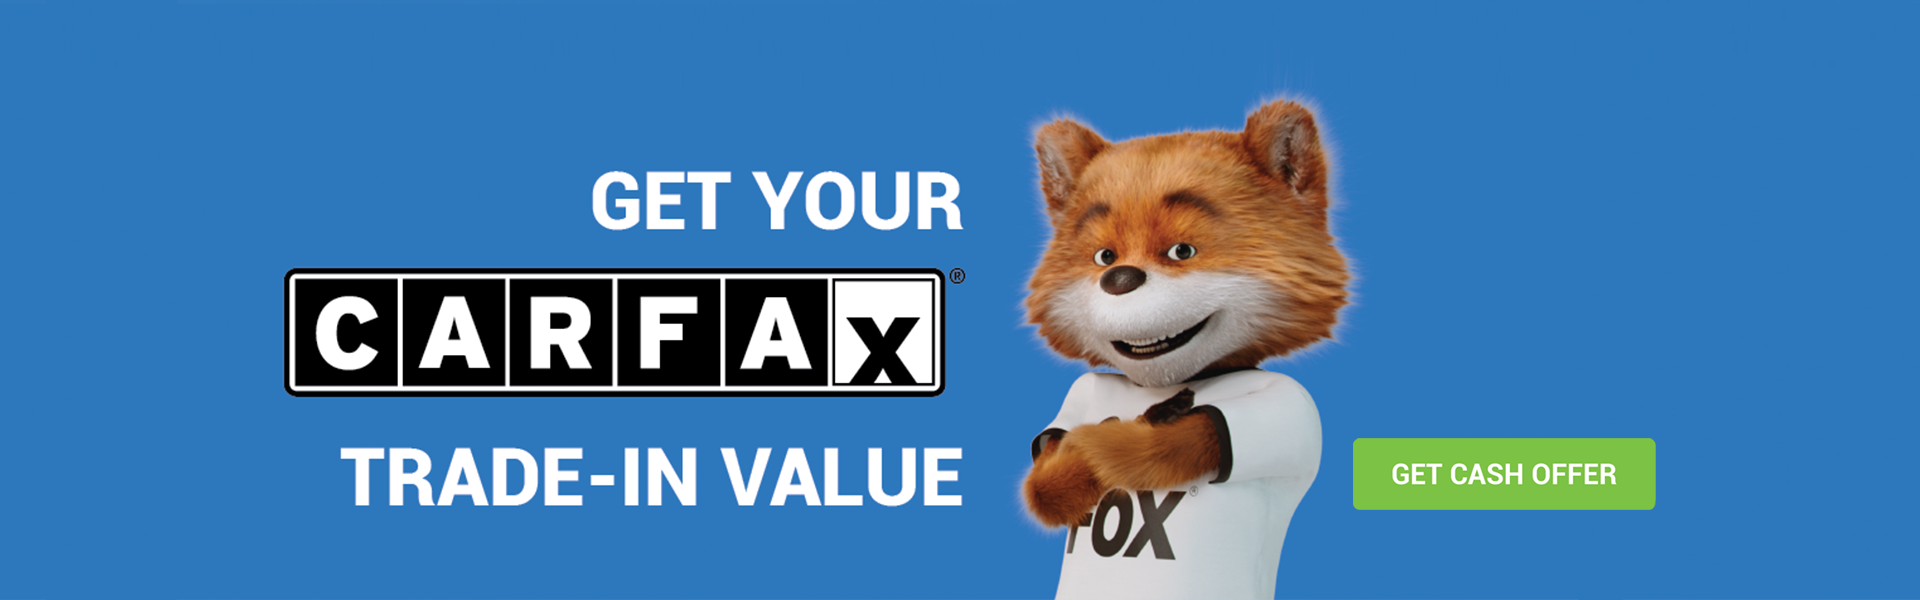 CarFax Trade In Cash Offer Fox